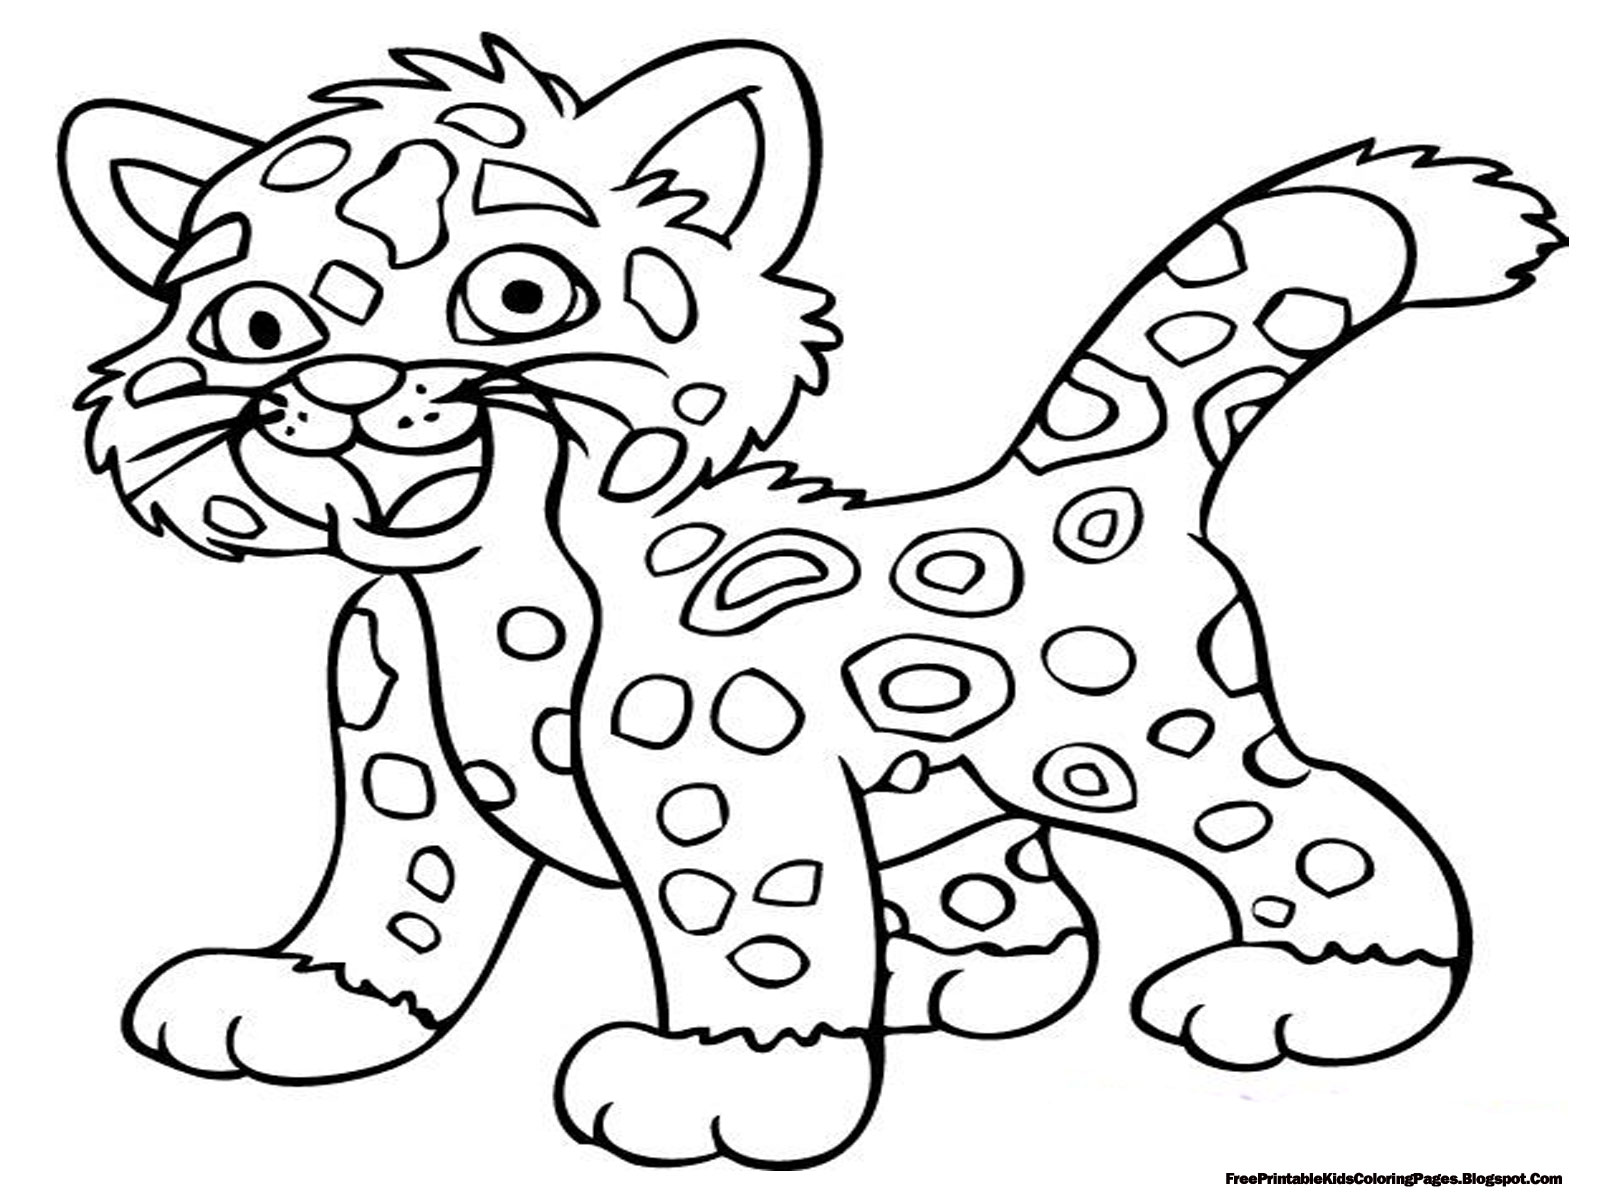 Download Jaguar Coloring Pages - Free Printable Kids Coloring Pages